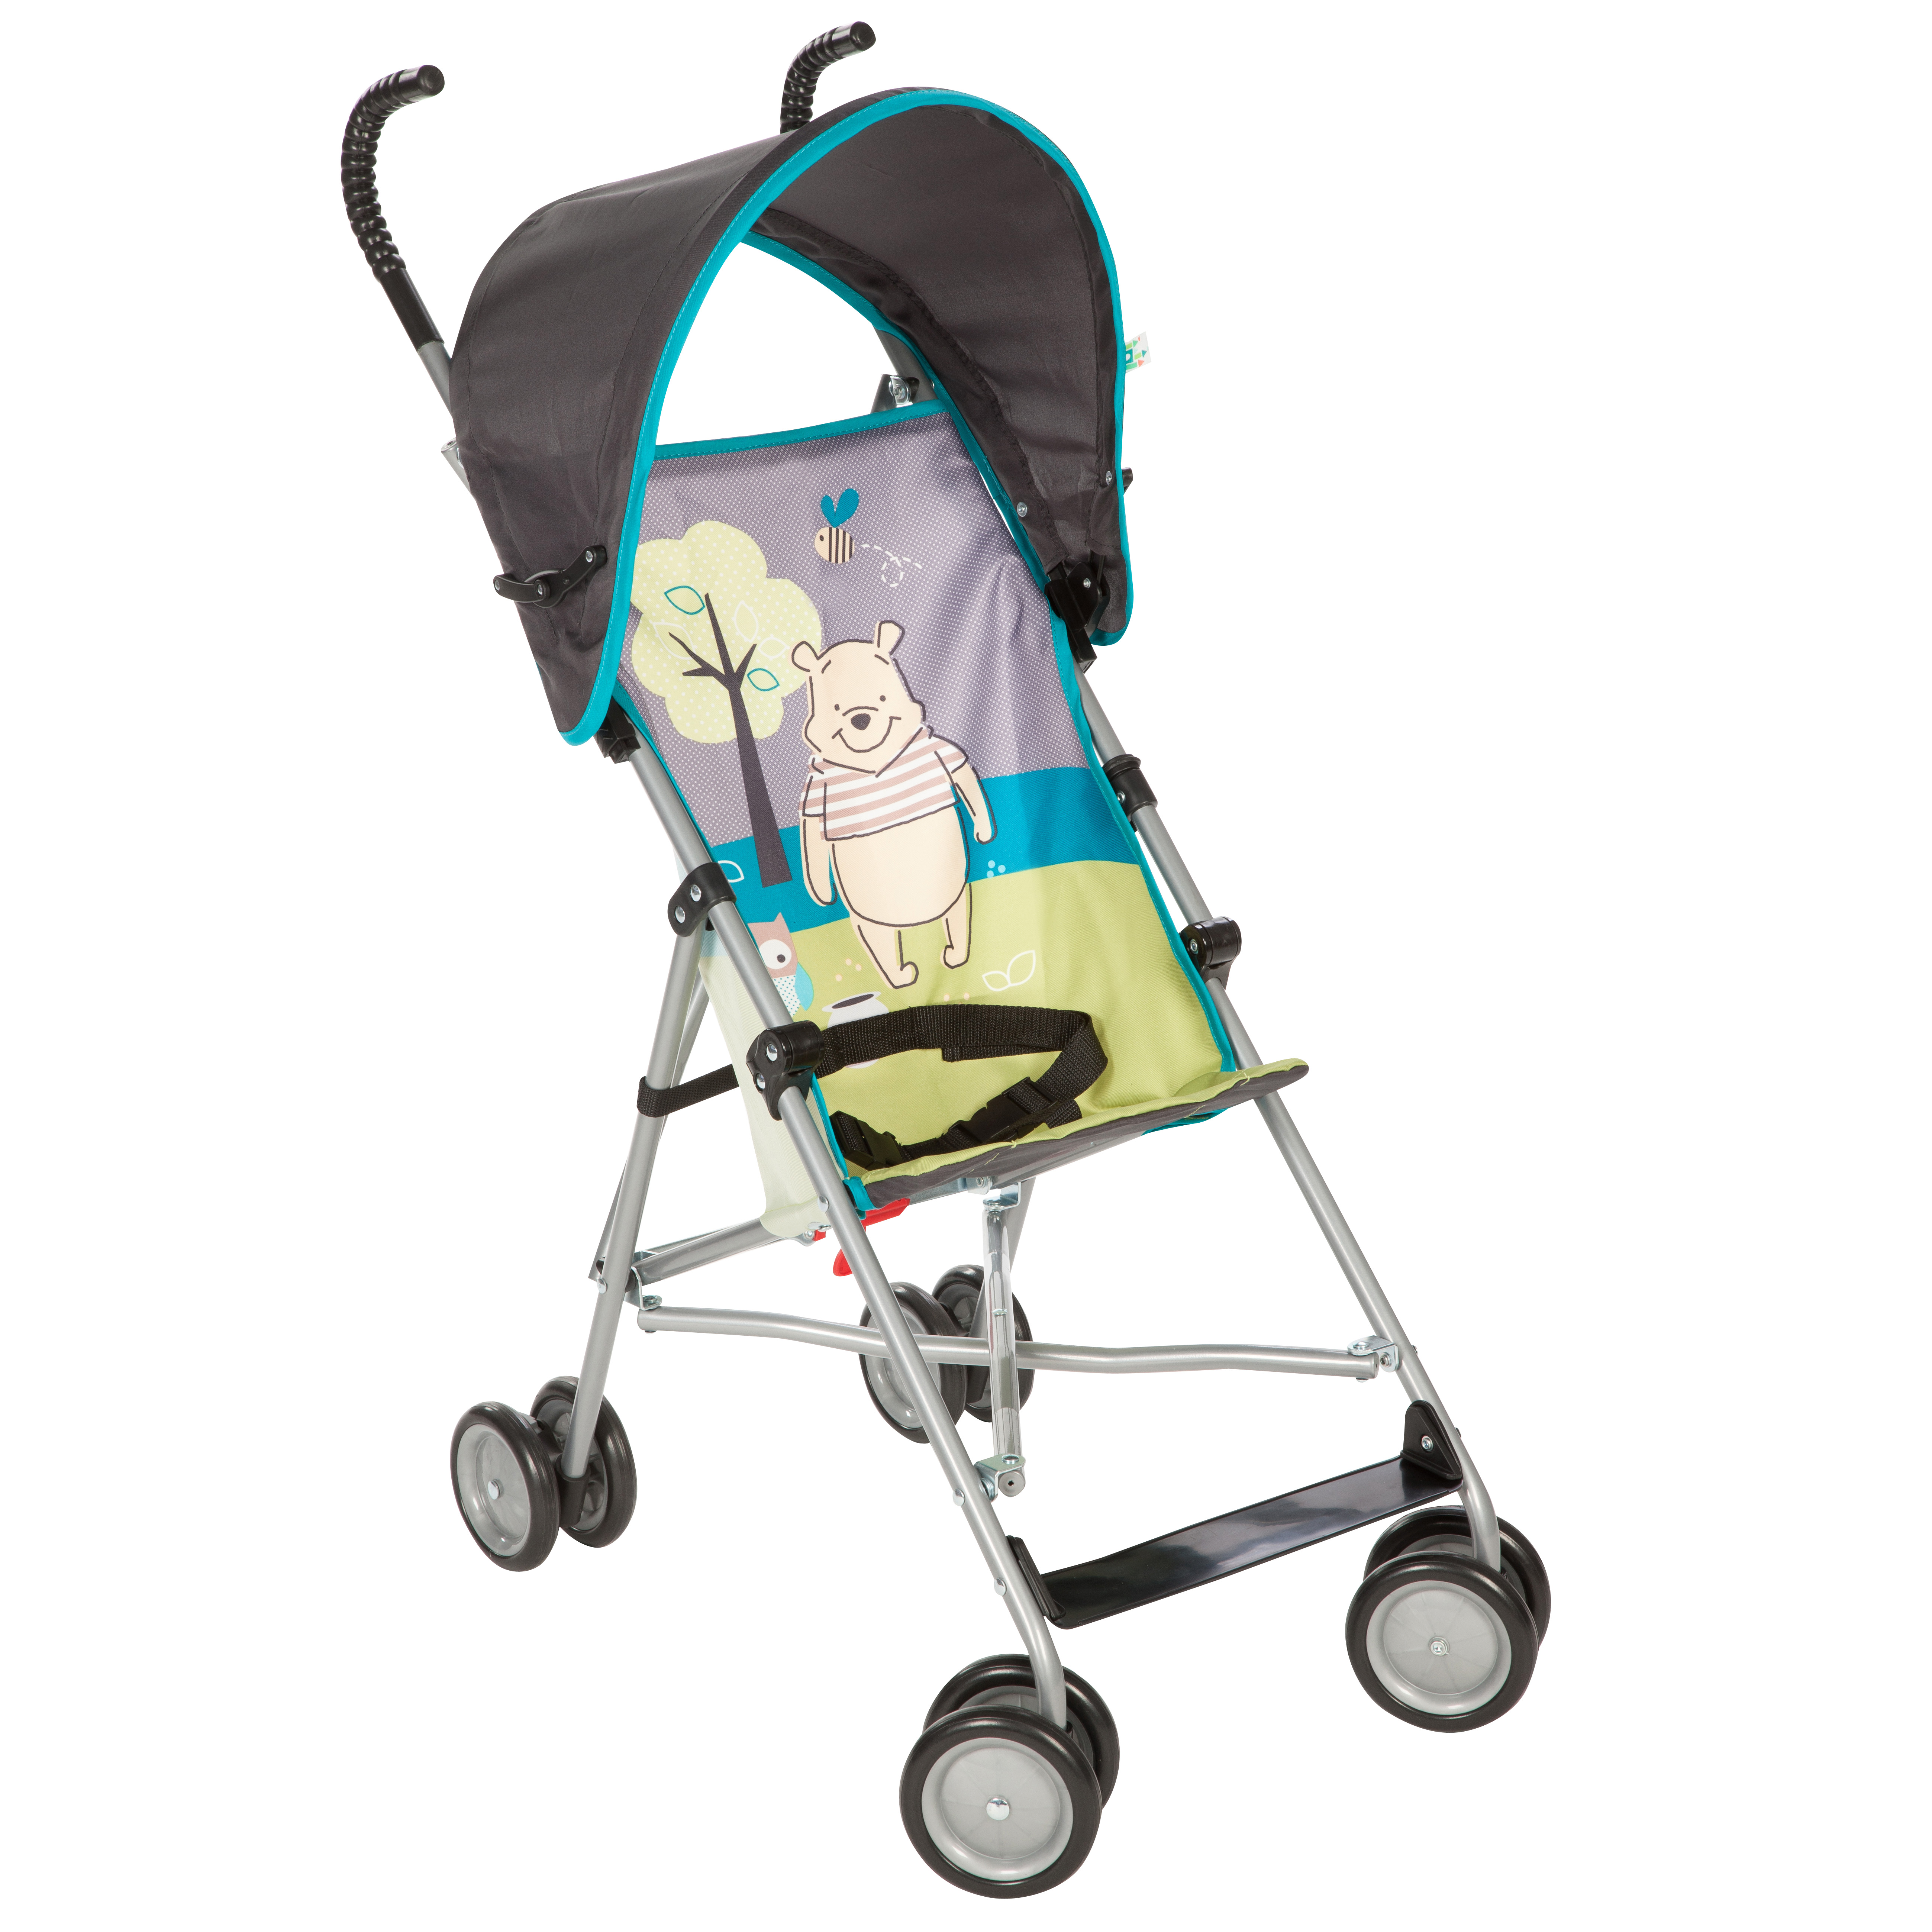 Disney Pooh Umbrella Stroller with Canopy Baby Baby